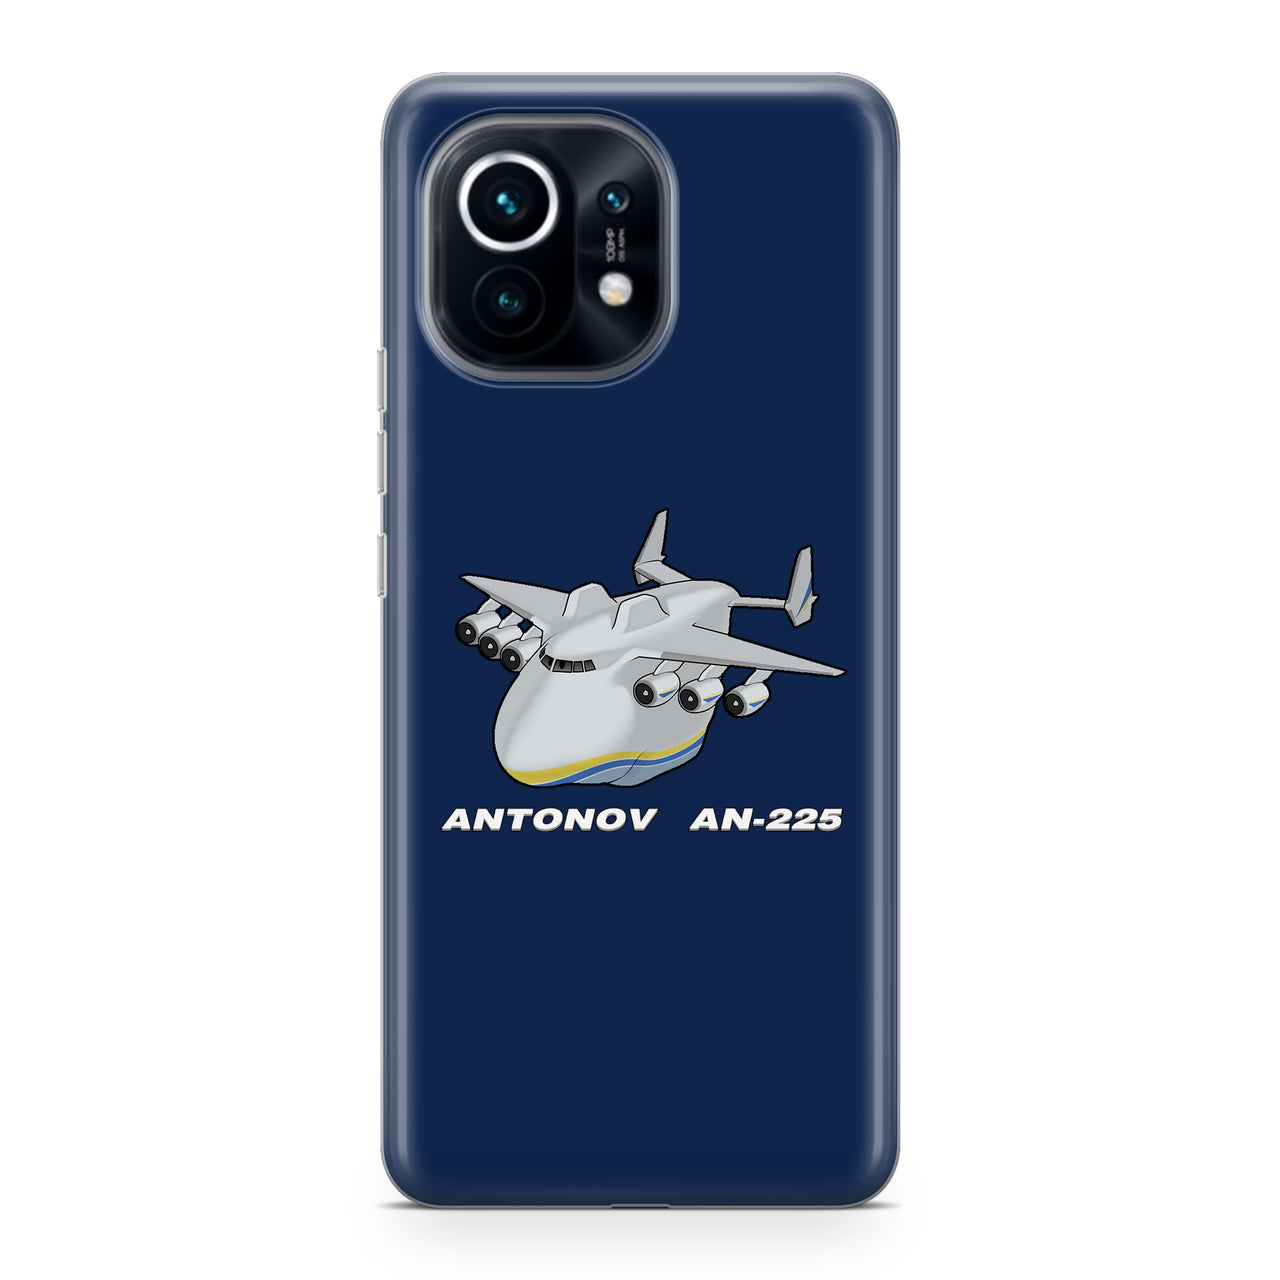 Antonov AN-225 (29) Designed Xiaomi Cases